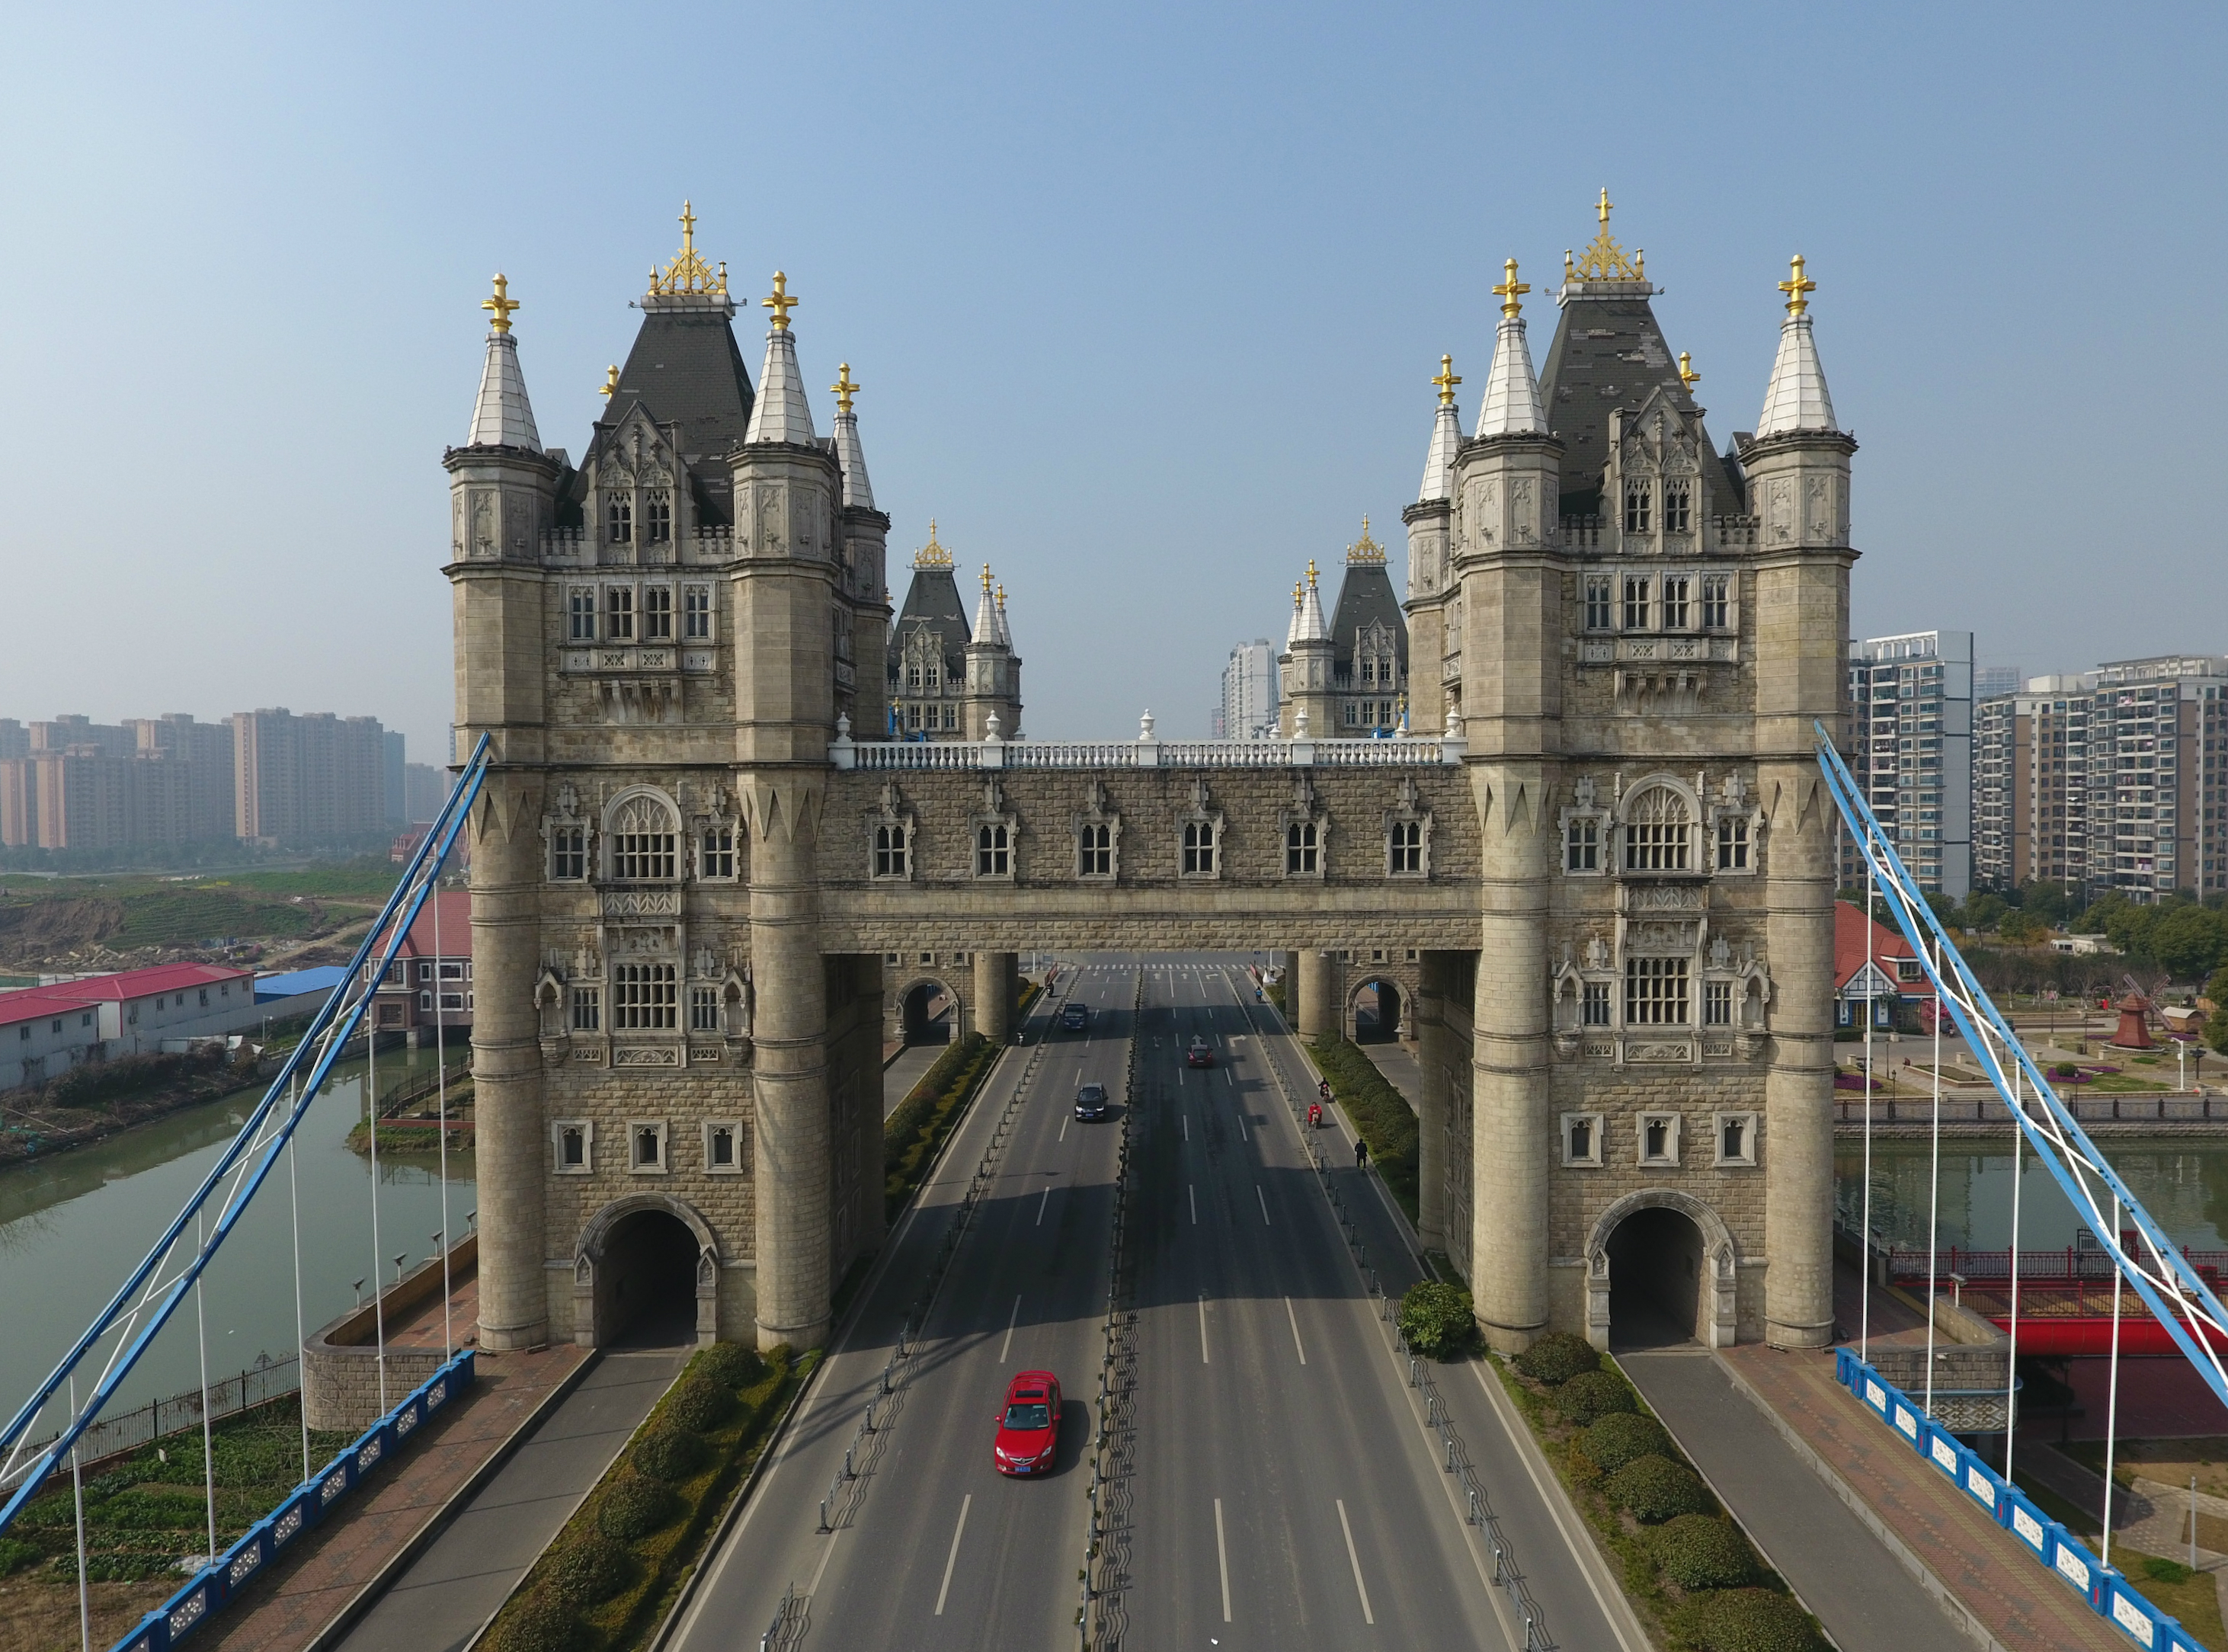 Tower Bridge replica in China